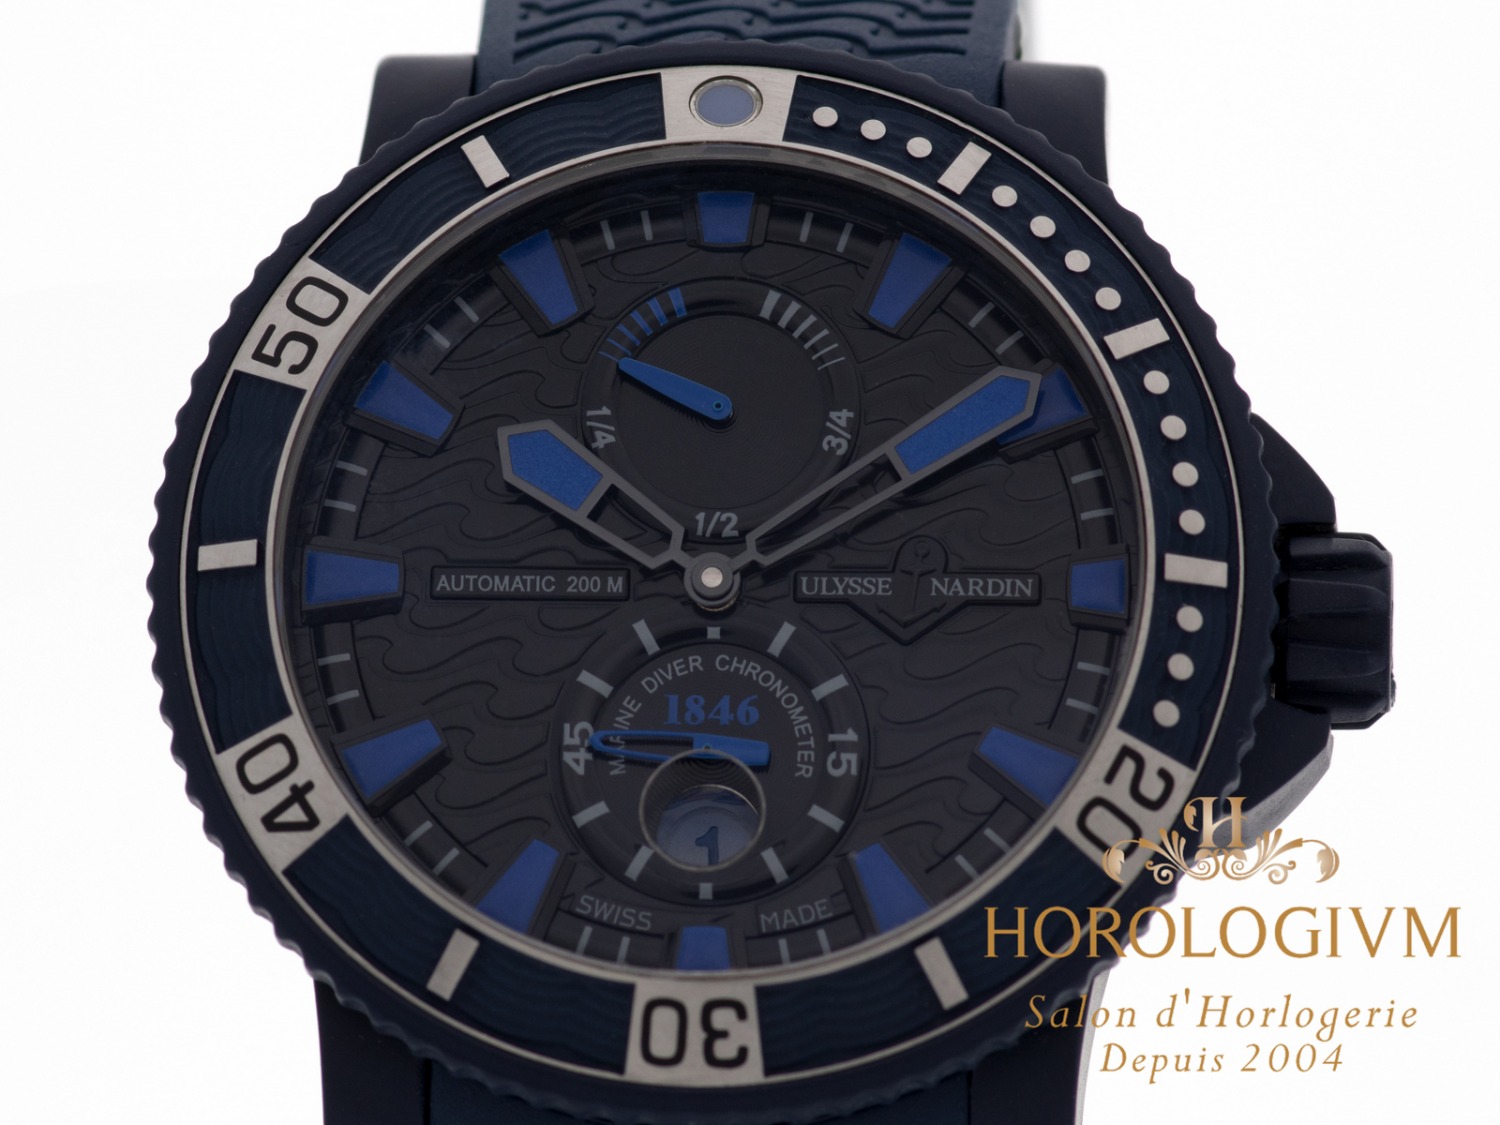 Ulysse Nardin Maxi Marine Diver “Blue Sea” Limited Edition 999 pcs watch, dark (navy) blue